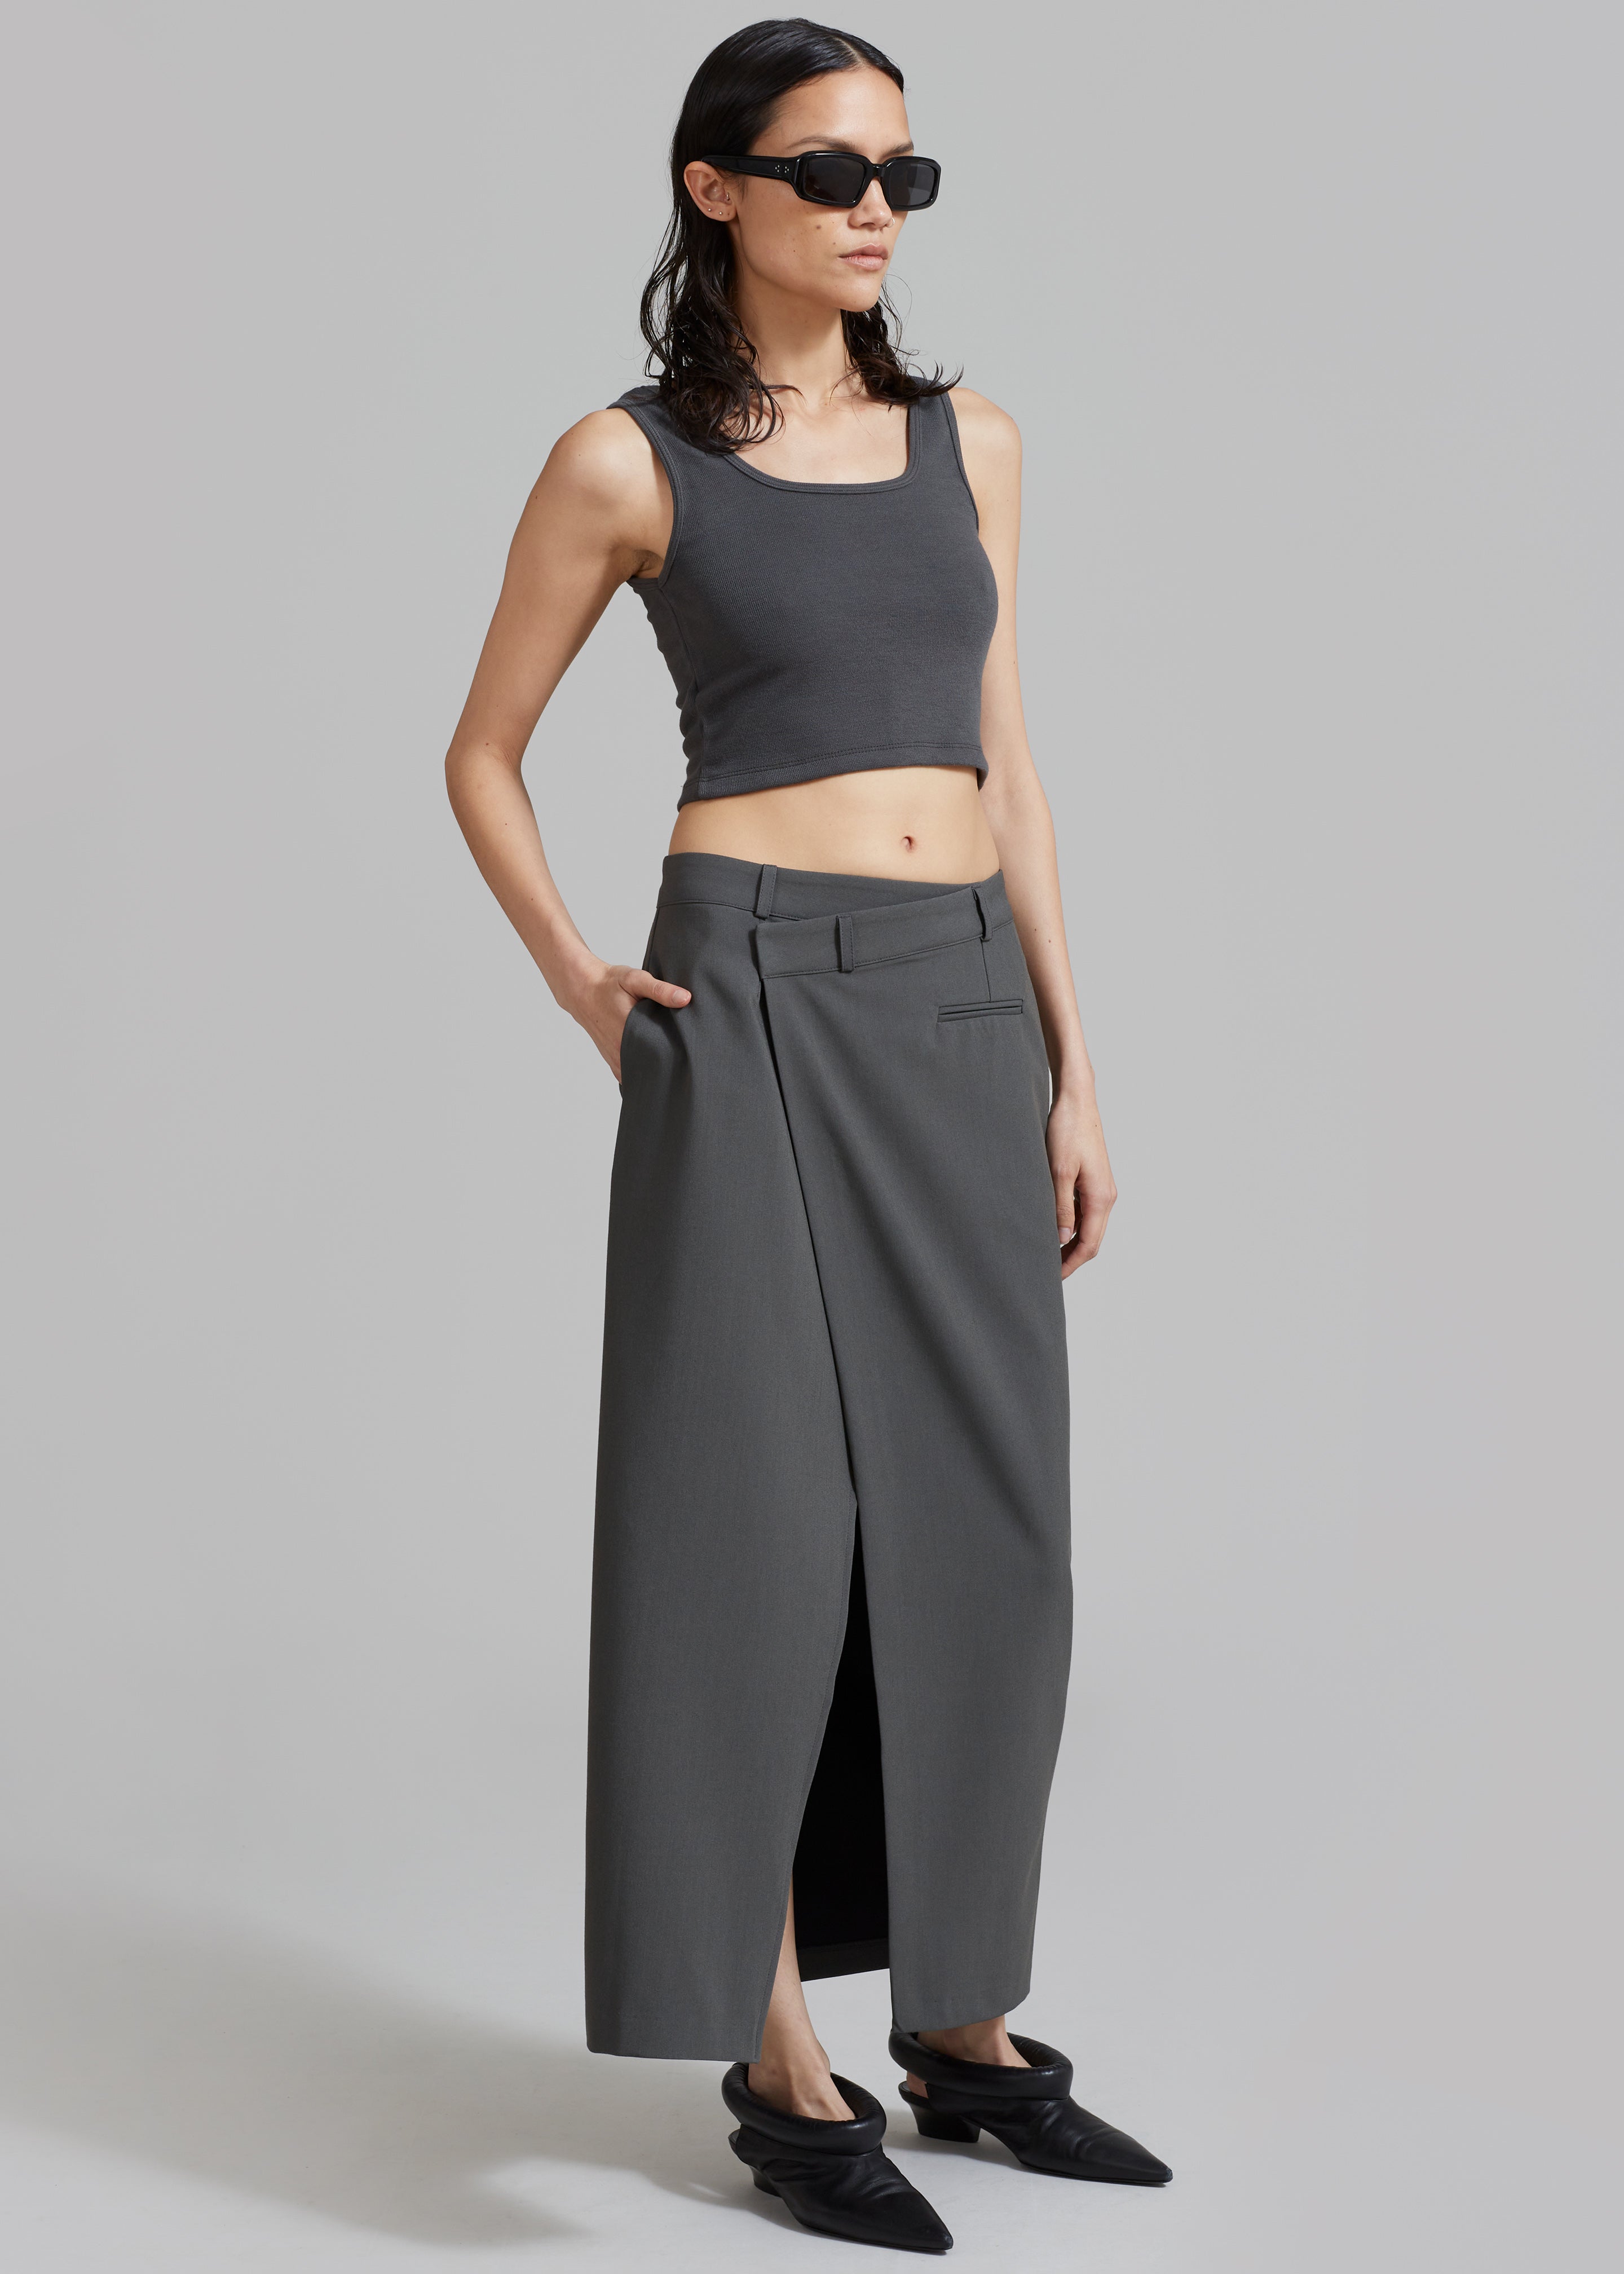 Annabel Asymmetric Midi Skirt - Grey - 6